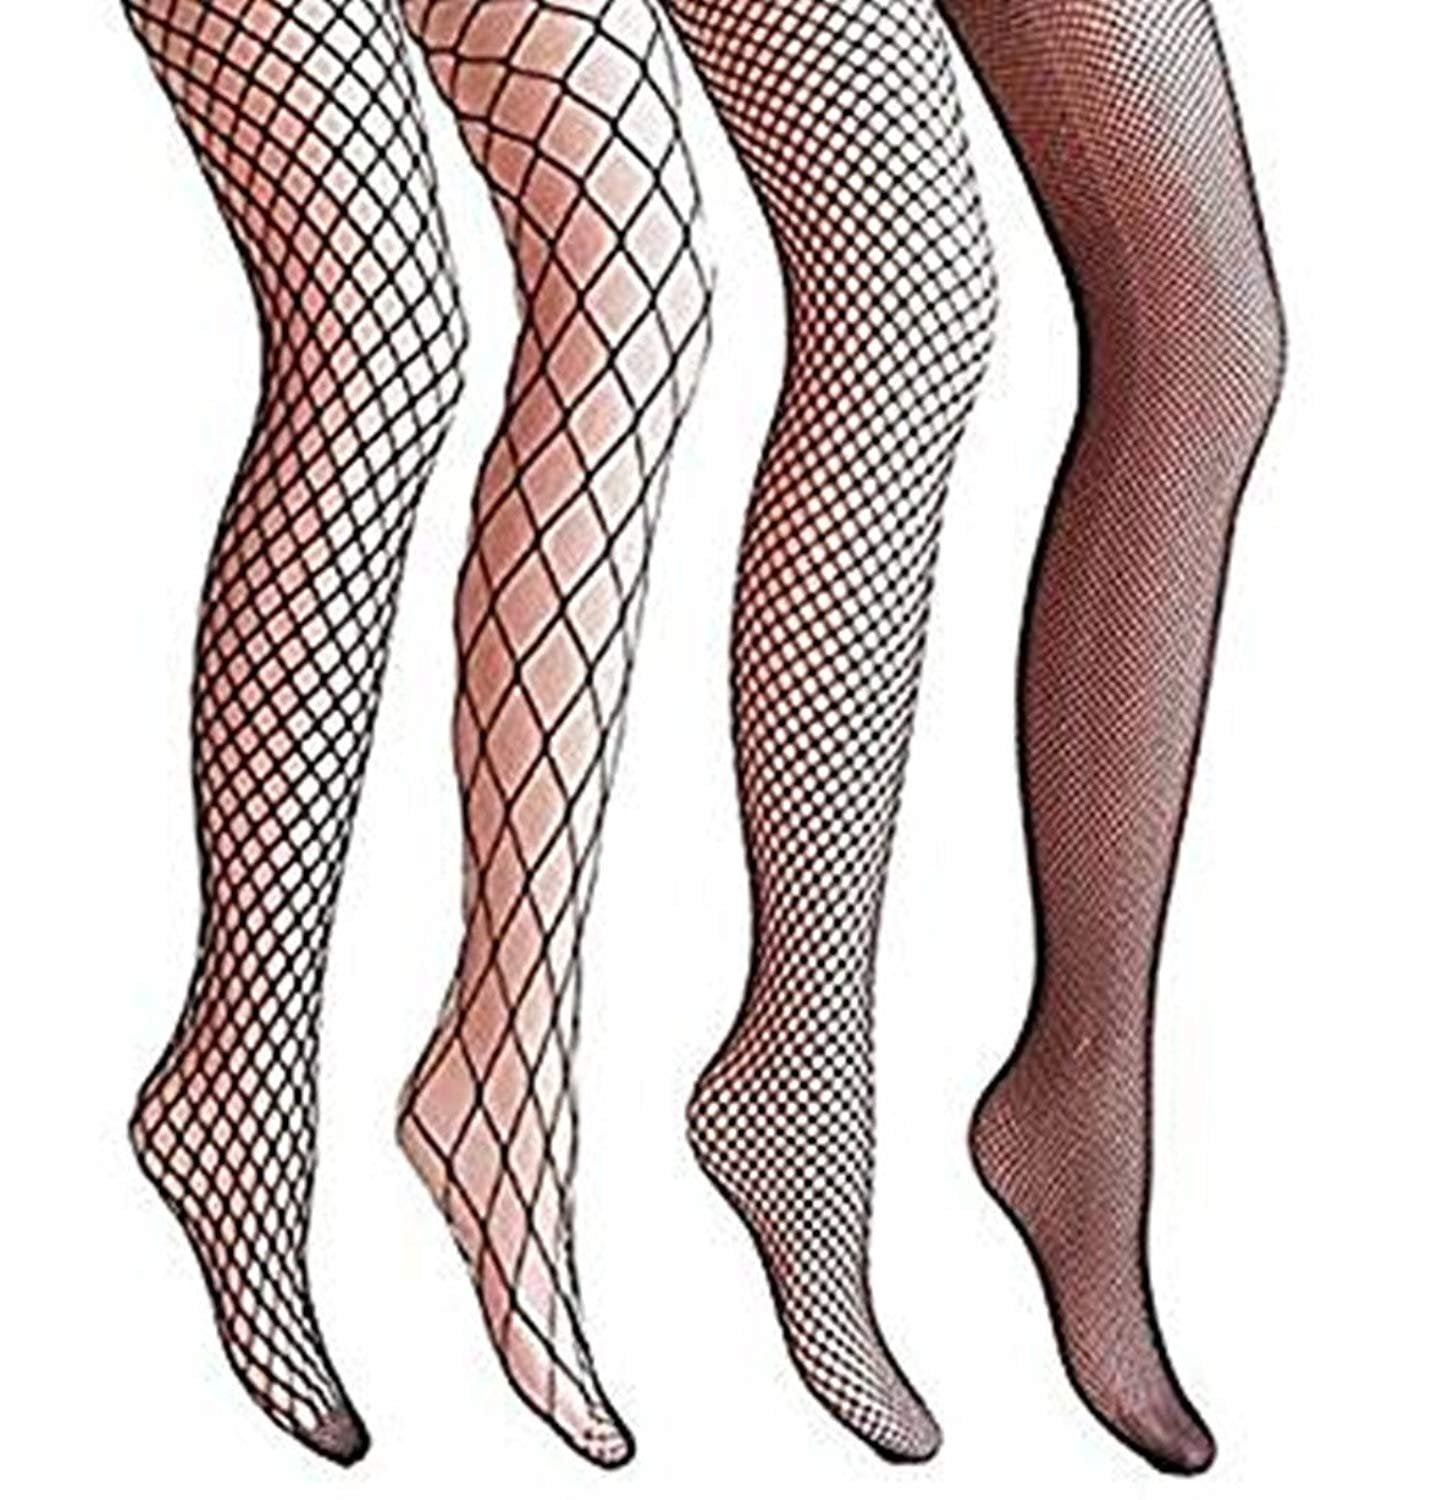 Magik 4 Packs Women Fishnet Stocking Cross Seamless Nylon Mesh Tights Pantyhose (Black Fishnet) picture